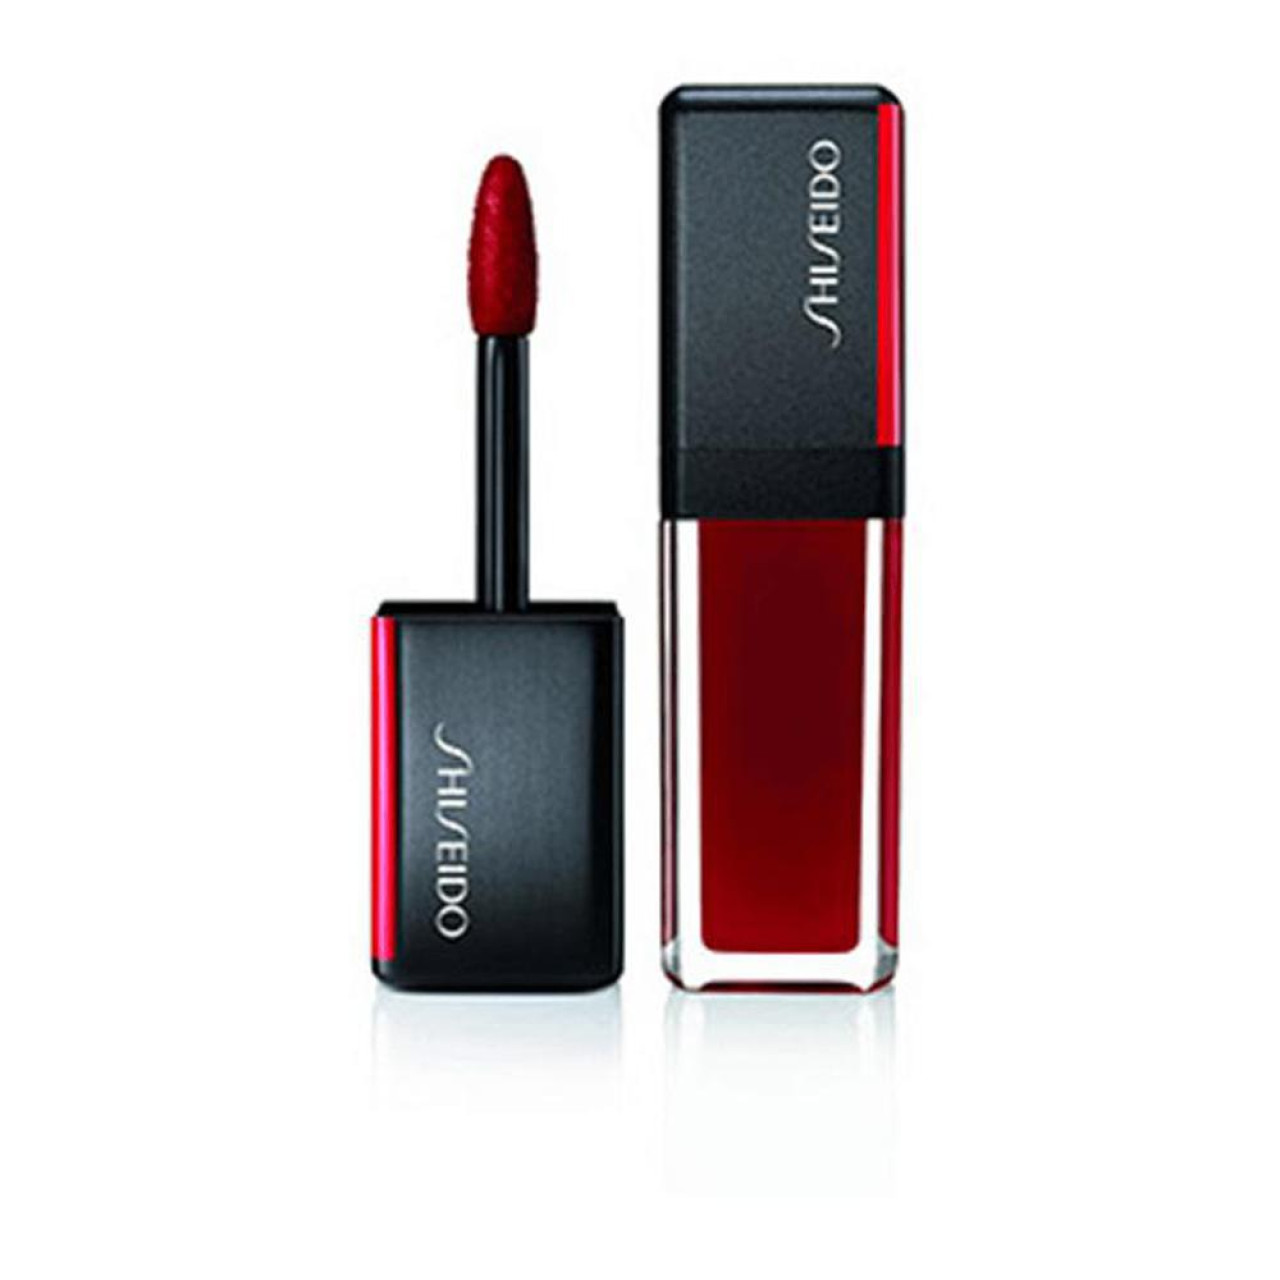 Shiseido laquerink lipstick 307